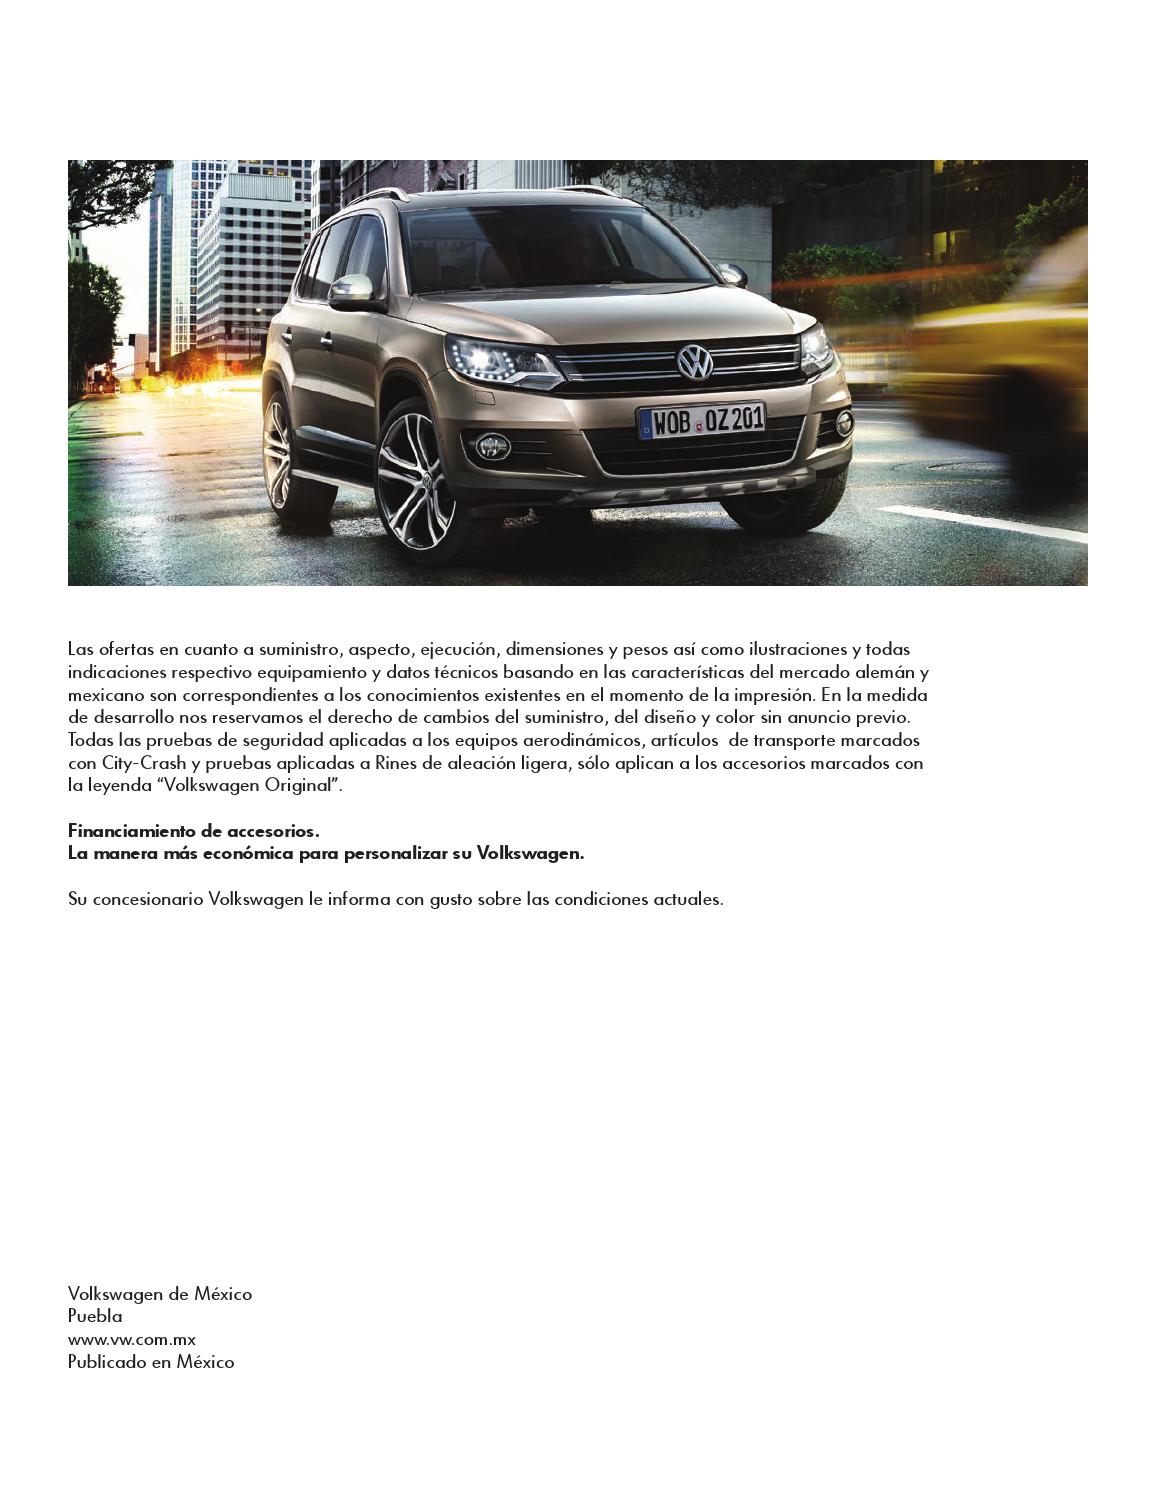  VW Archives - 2014 VW Tiguan Accessories Brochure - Mexico